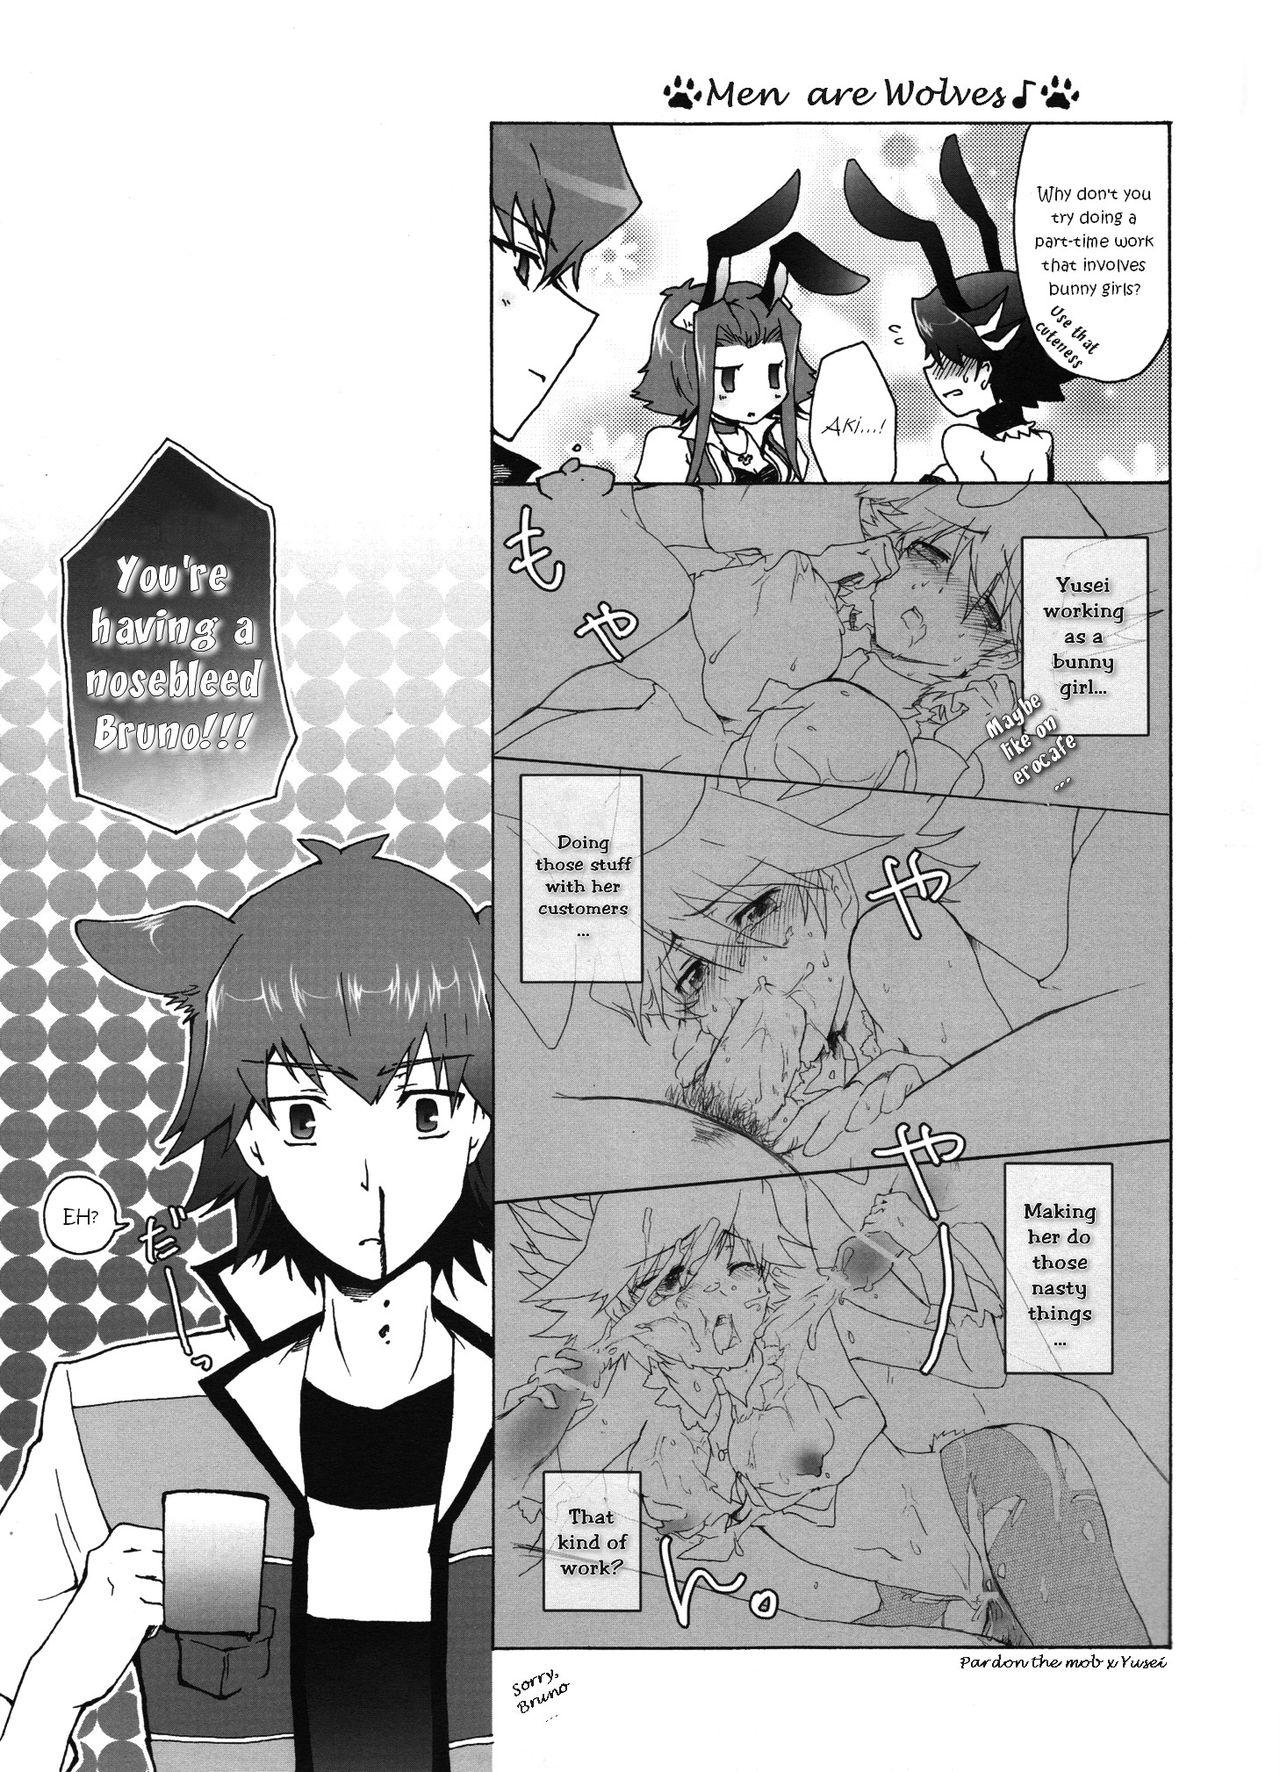 Massage Creep Datte Kemono da mono. - Yu-gi-oh 5ds Exgirlfriend - Page 10